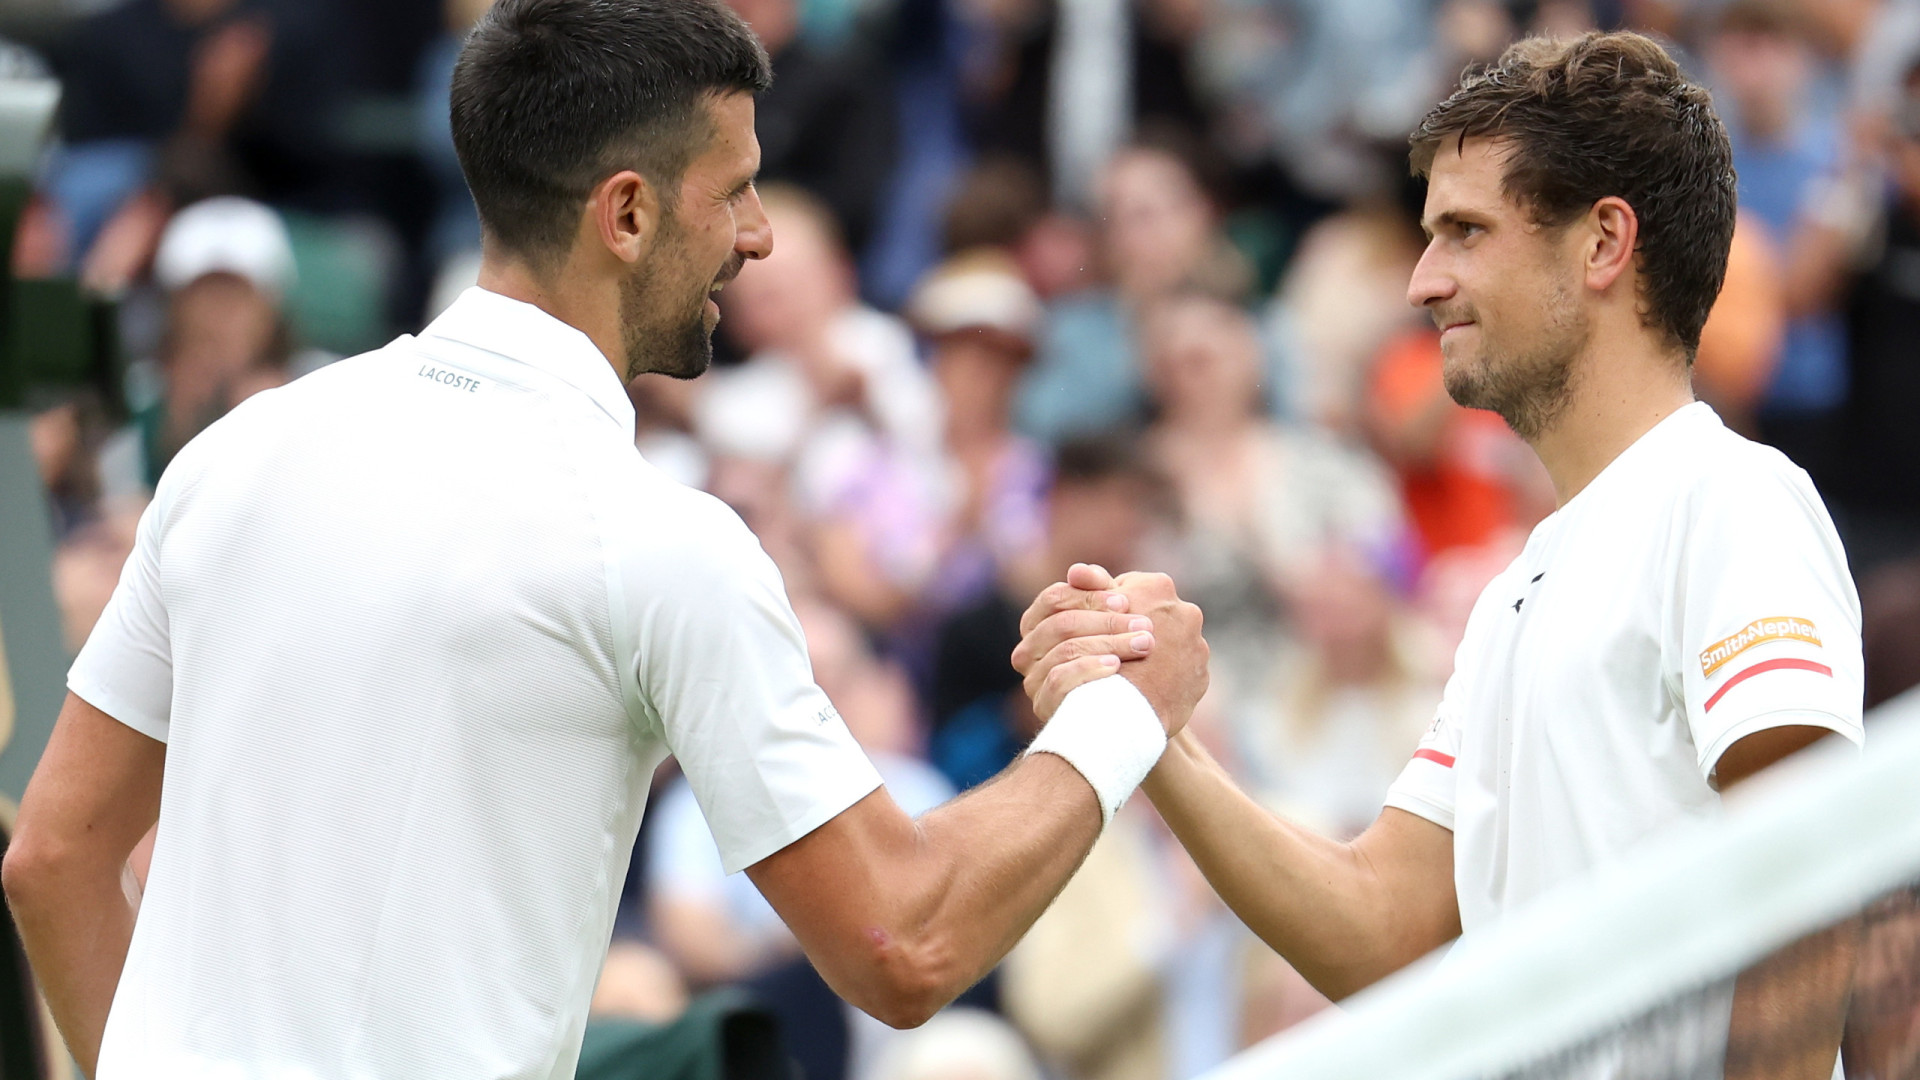 Wimbledon: Djokovic avança para a segunda ronda ao derrotar Kopriva